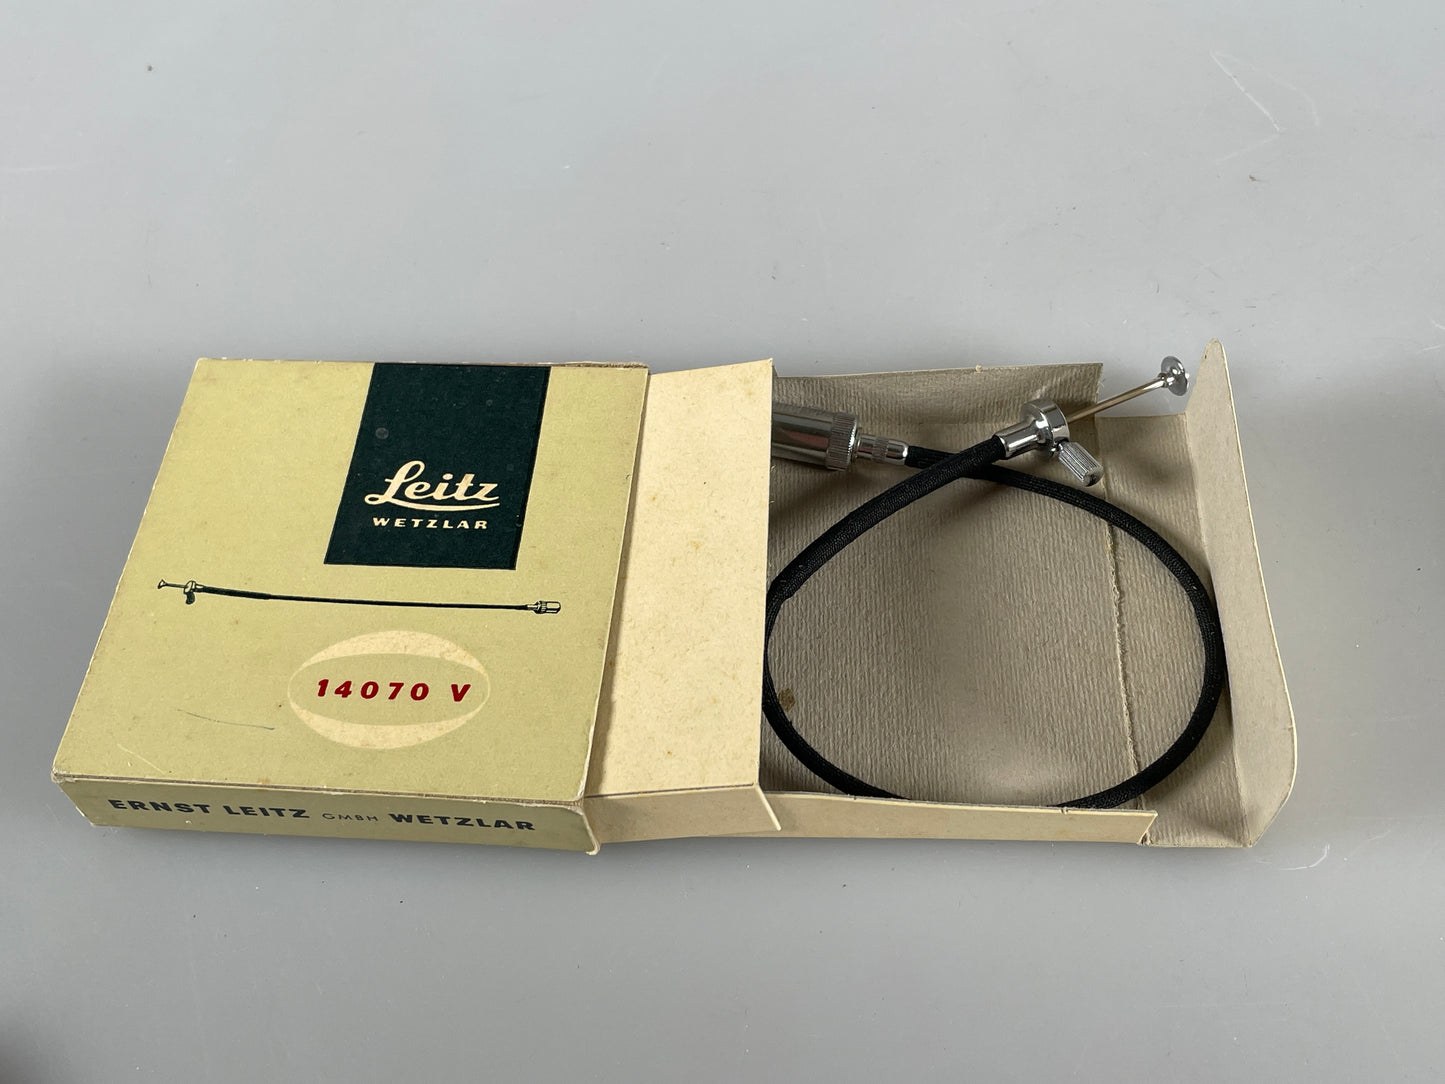 Leica Leitz Camera Shutter Cable Release Rangefinder Bell w/ Lock - 10” 14070 V